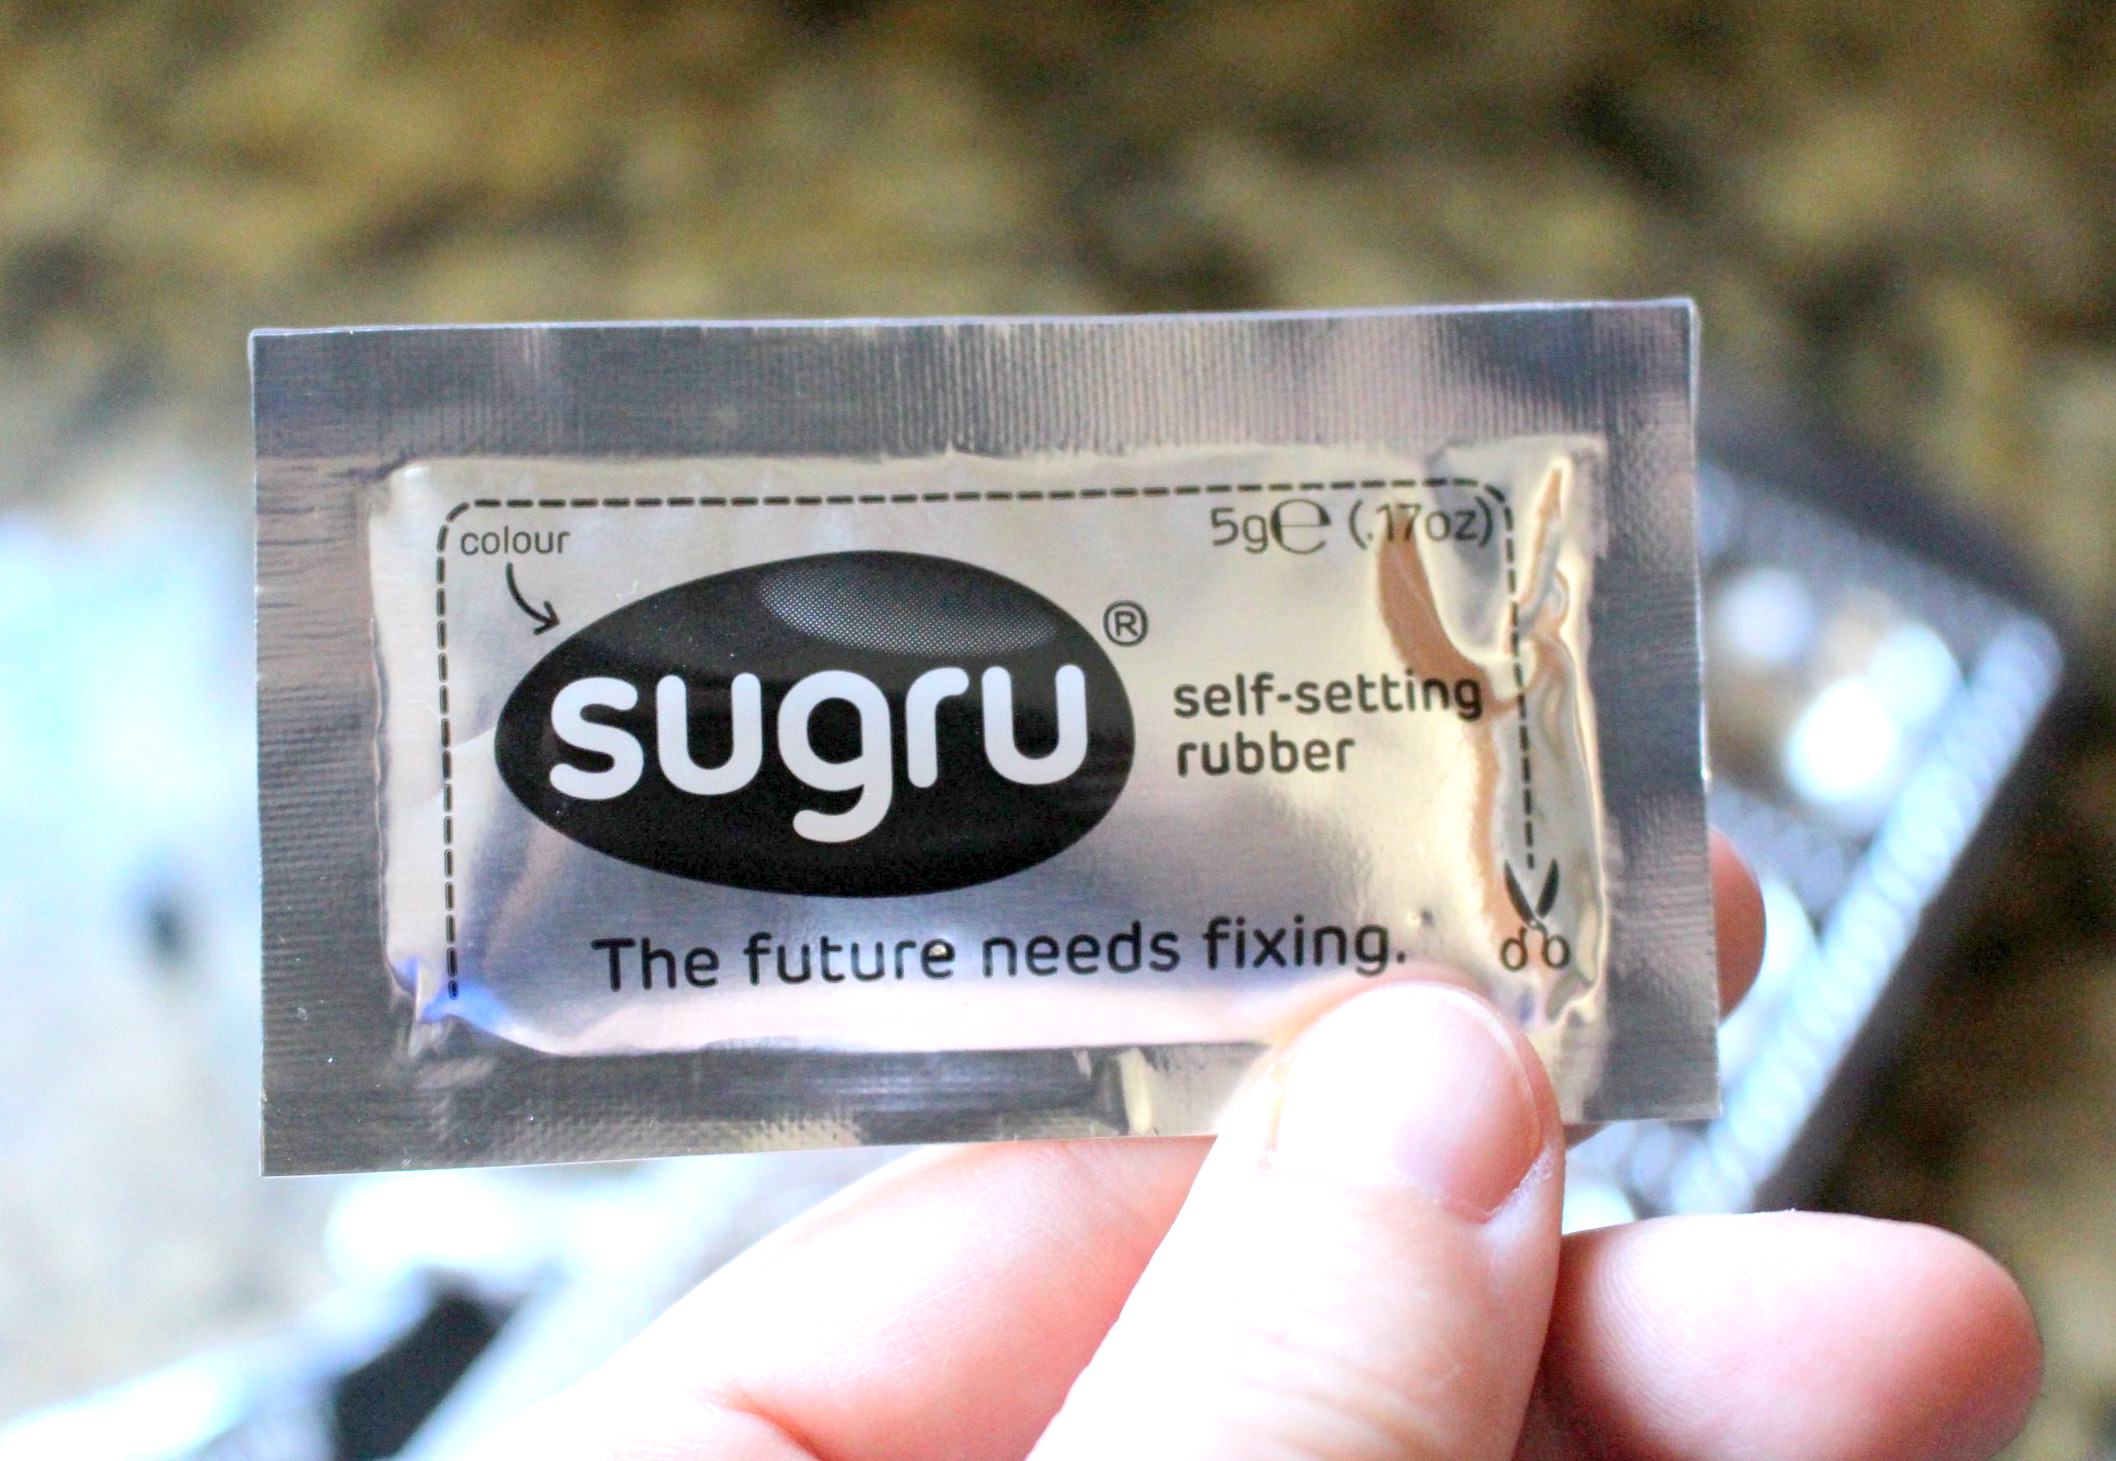 sugru: The future needs fixing